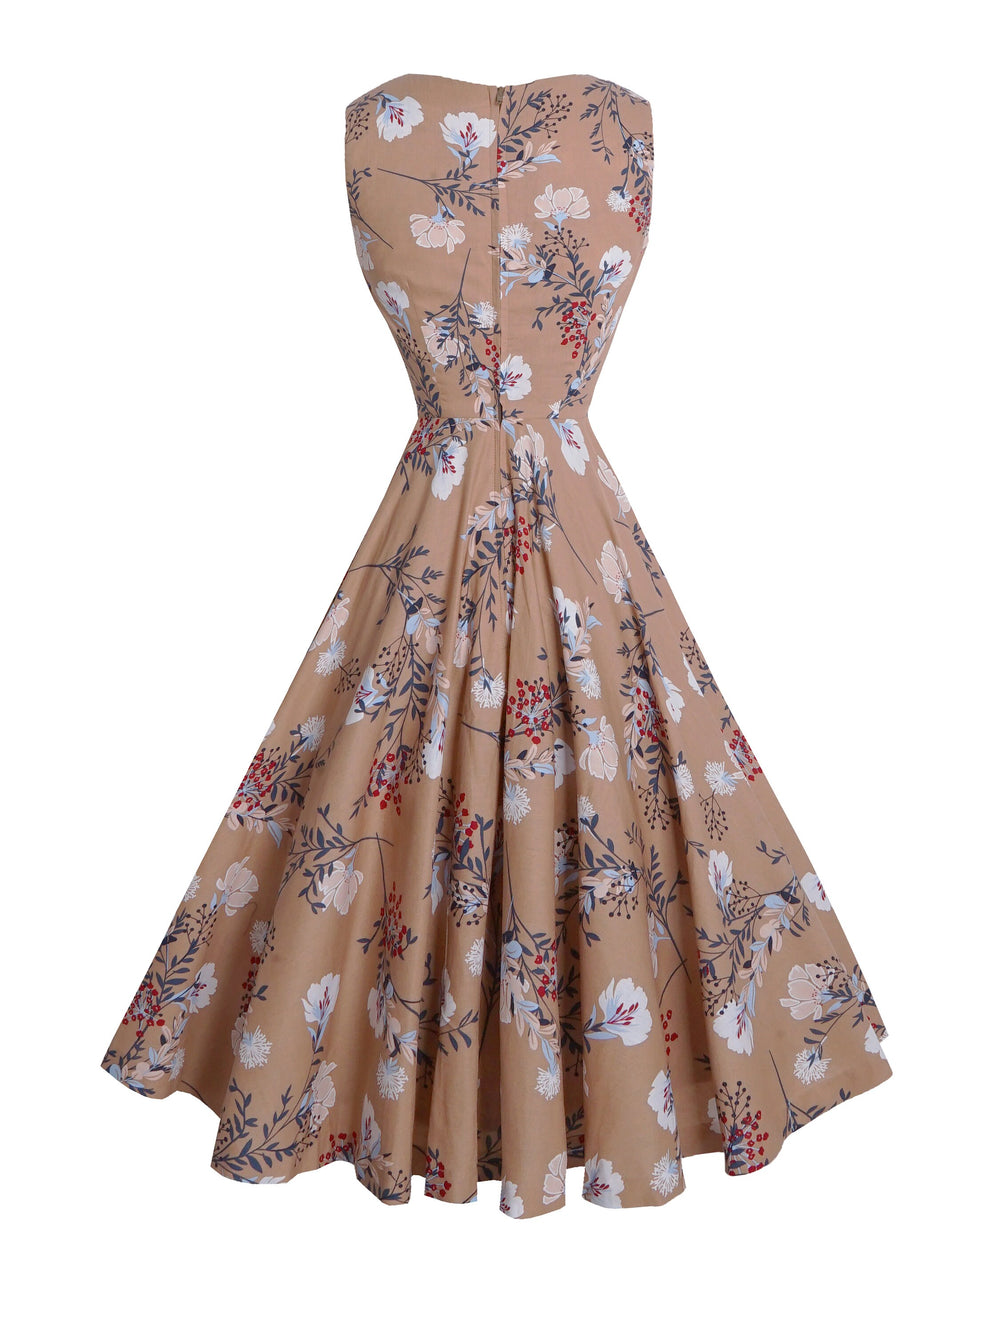 RTS - Size S - Carolyn Dress "Desert Flower" Floral Print